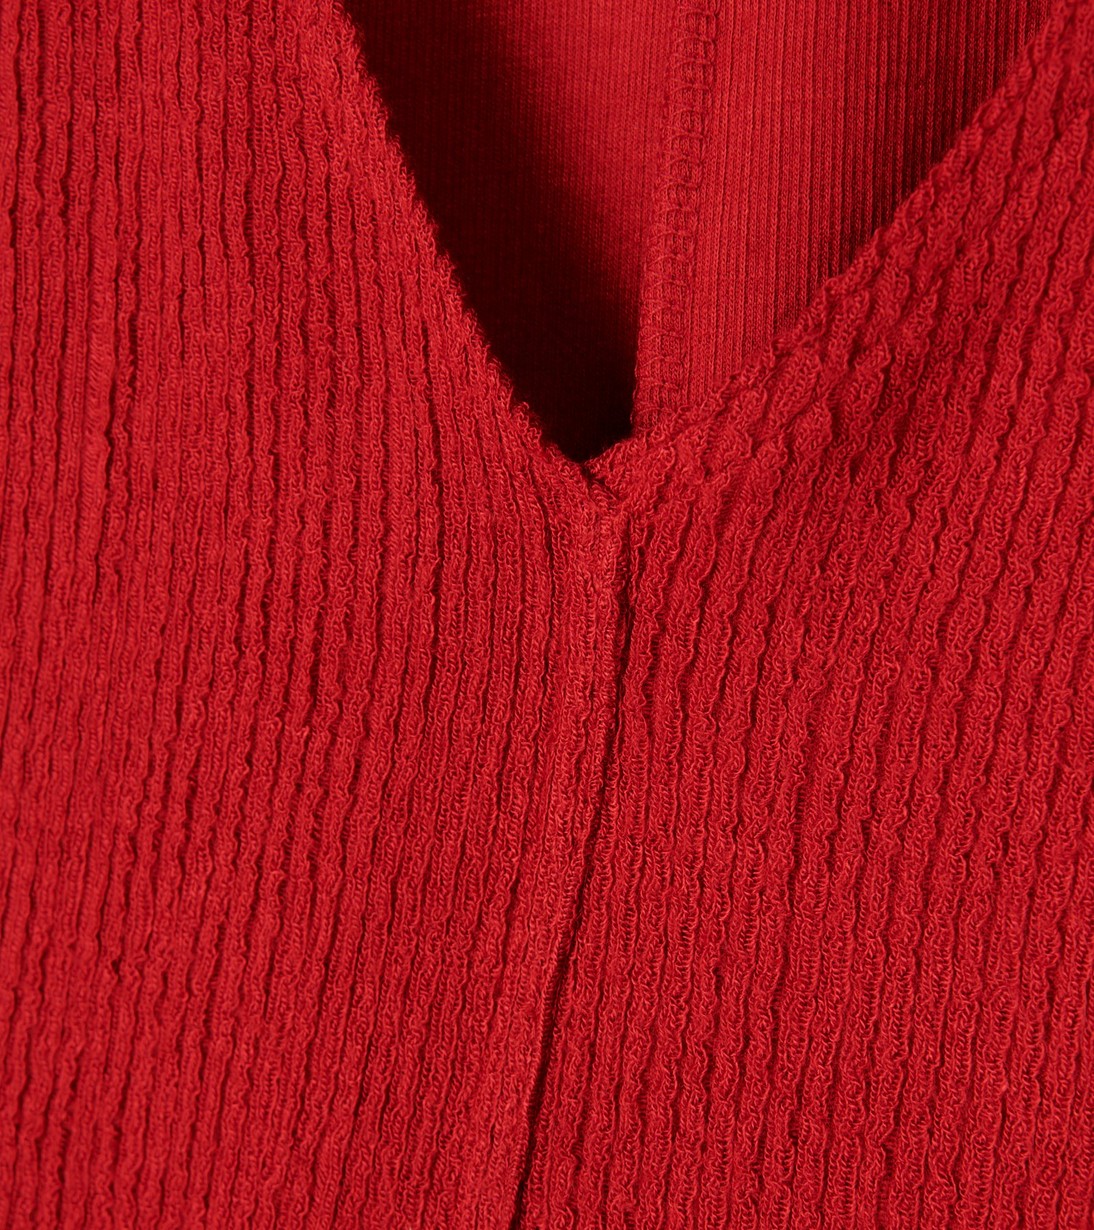 CKS Dames - IVORY - t-shirt korte mouwen - rood